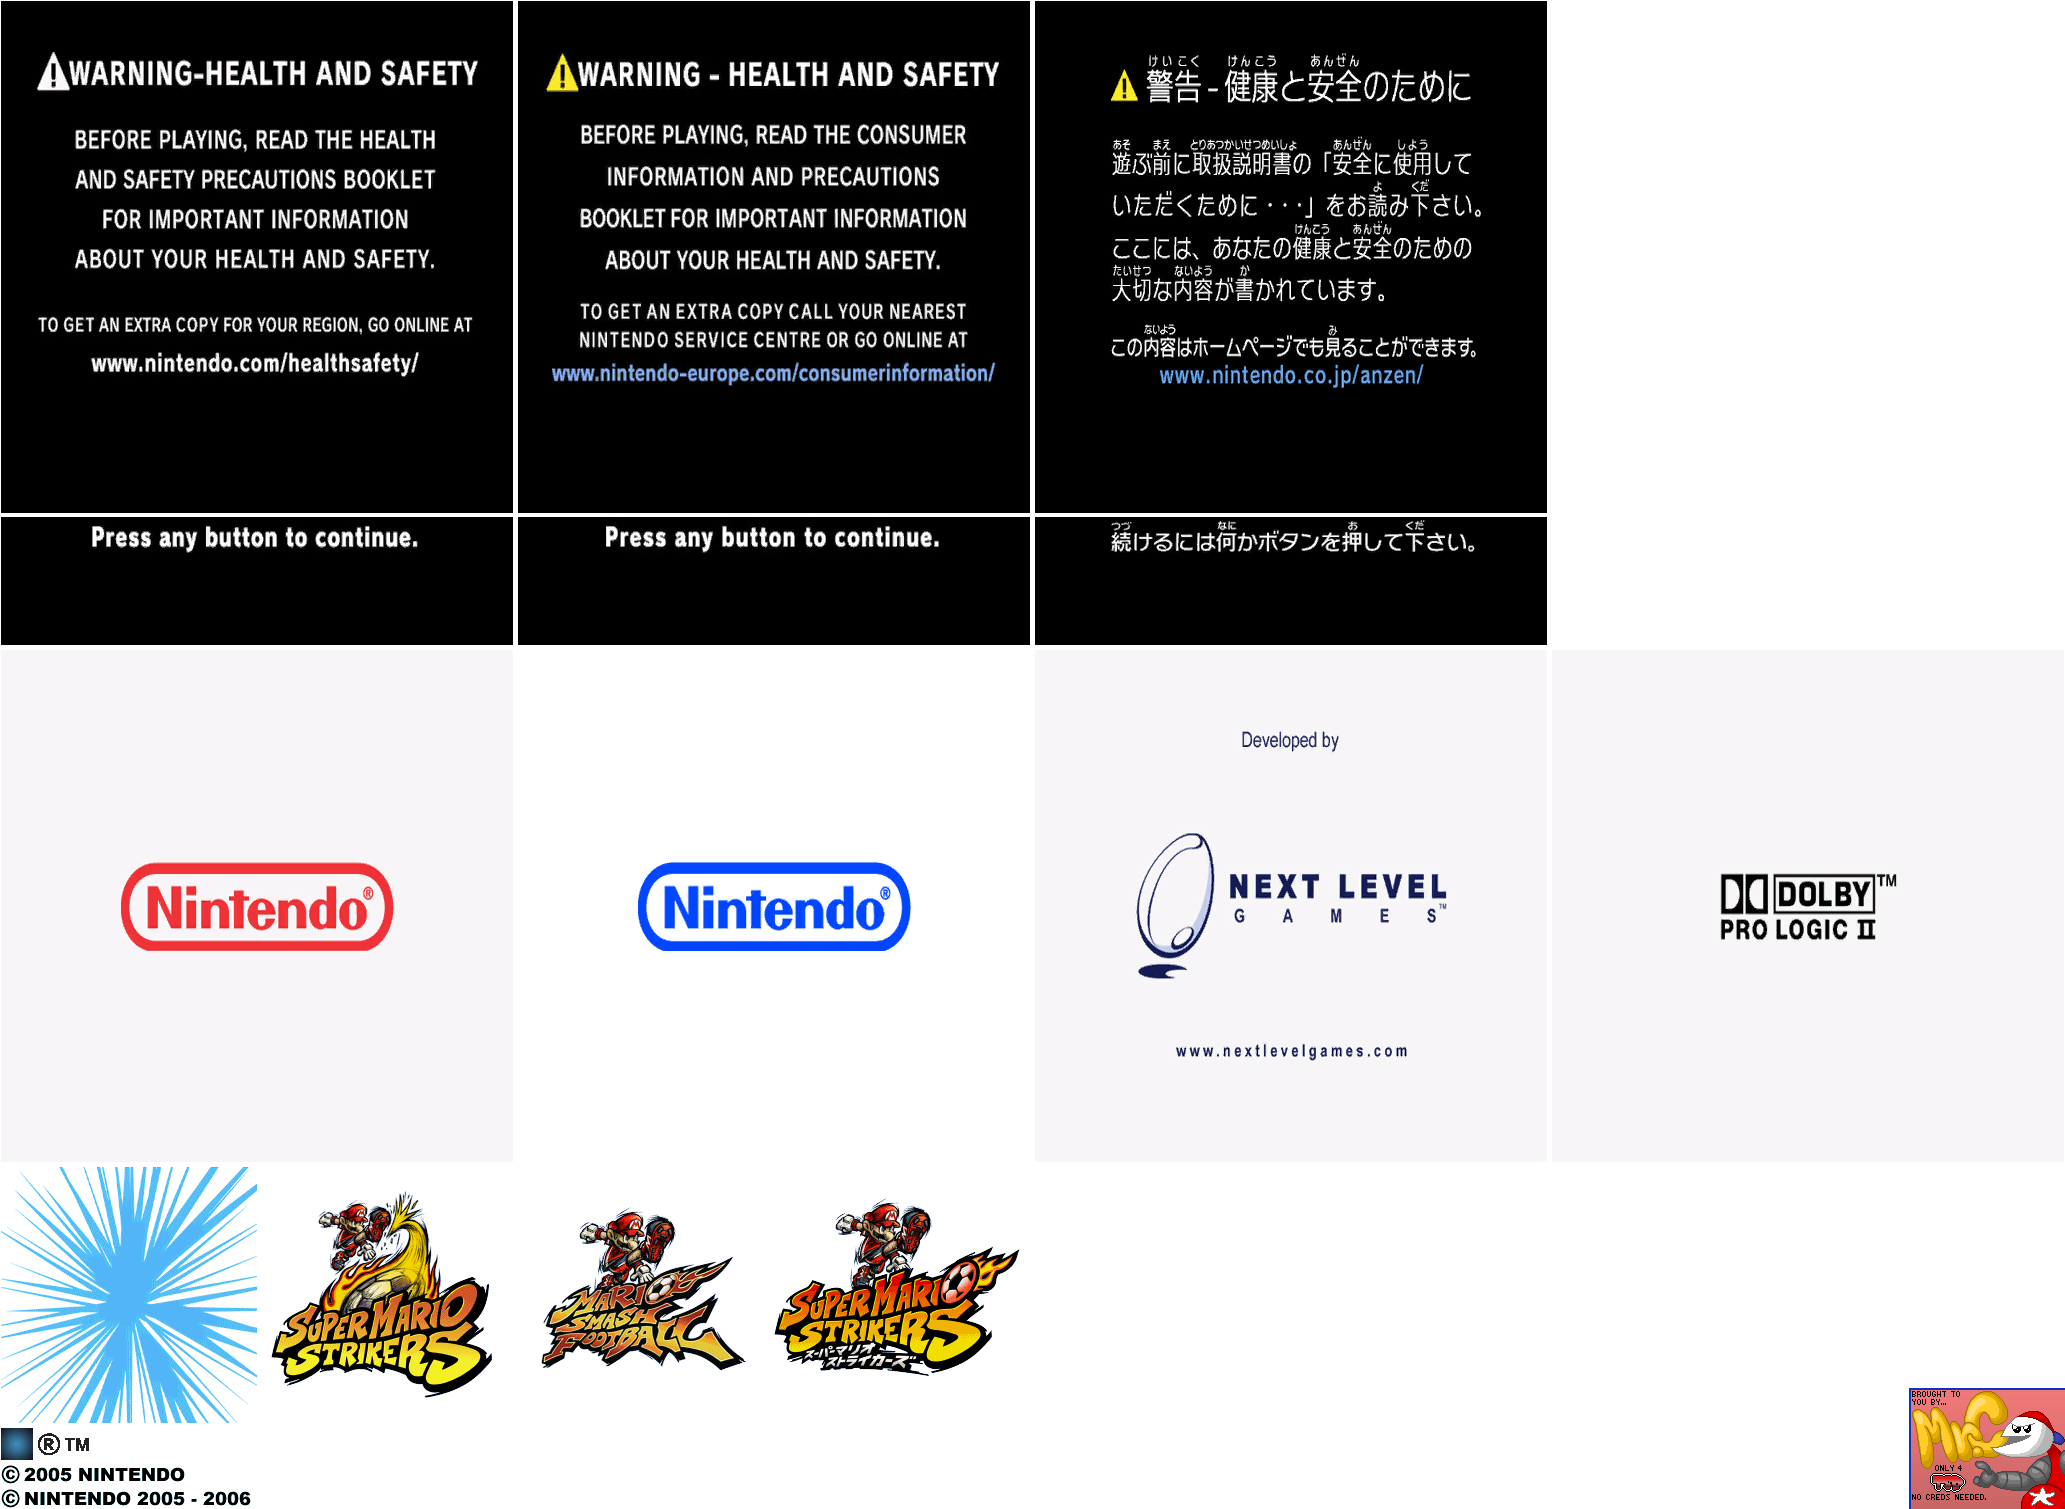 Super Mario Strikers - Logos & Title Screen